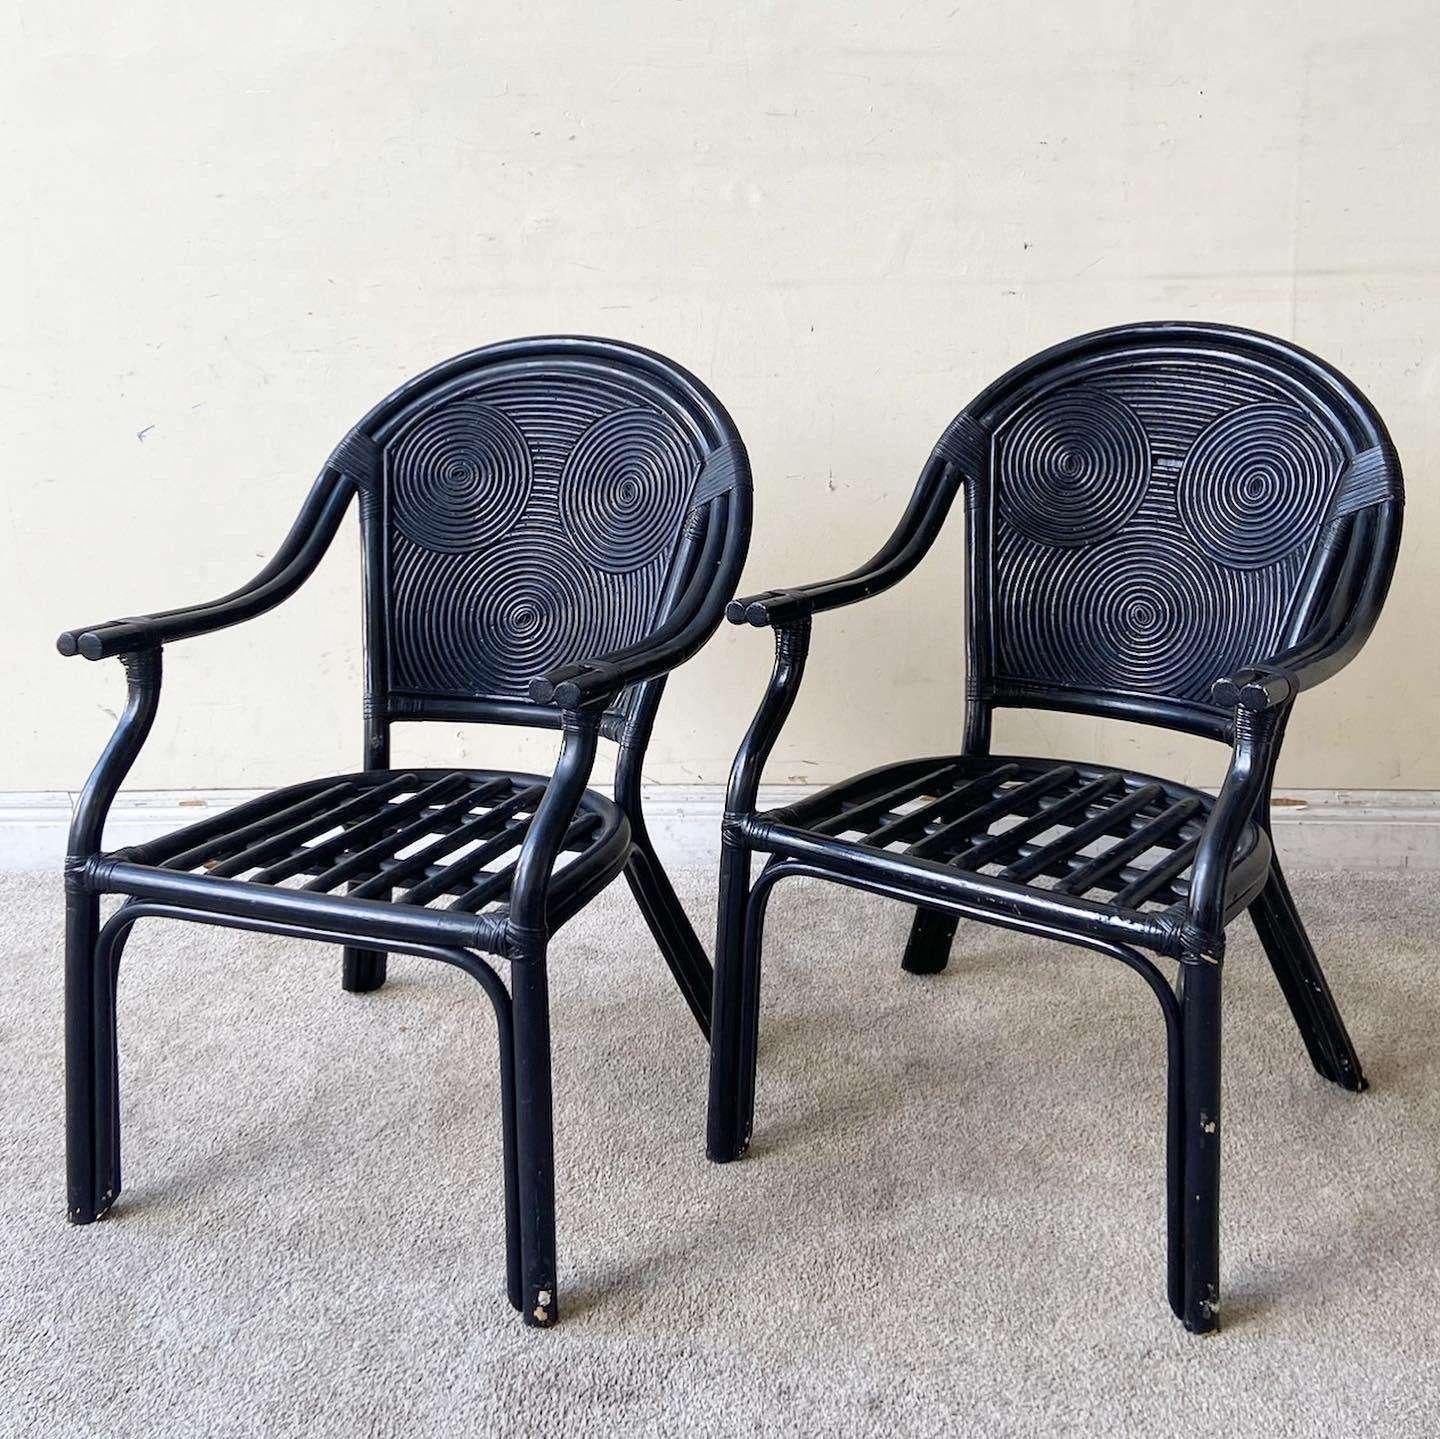 Bamboo Boho Chic Black Pencil Reed Arm Chairs - a Pair